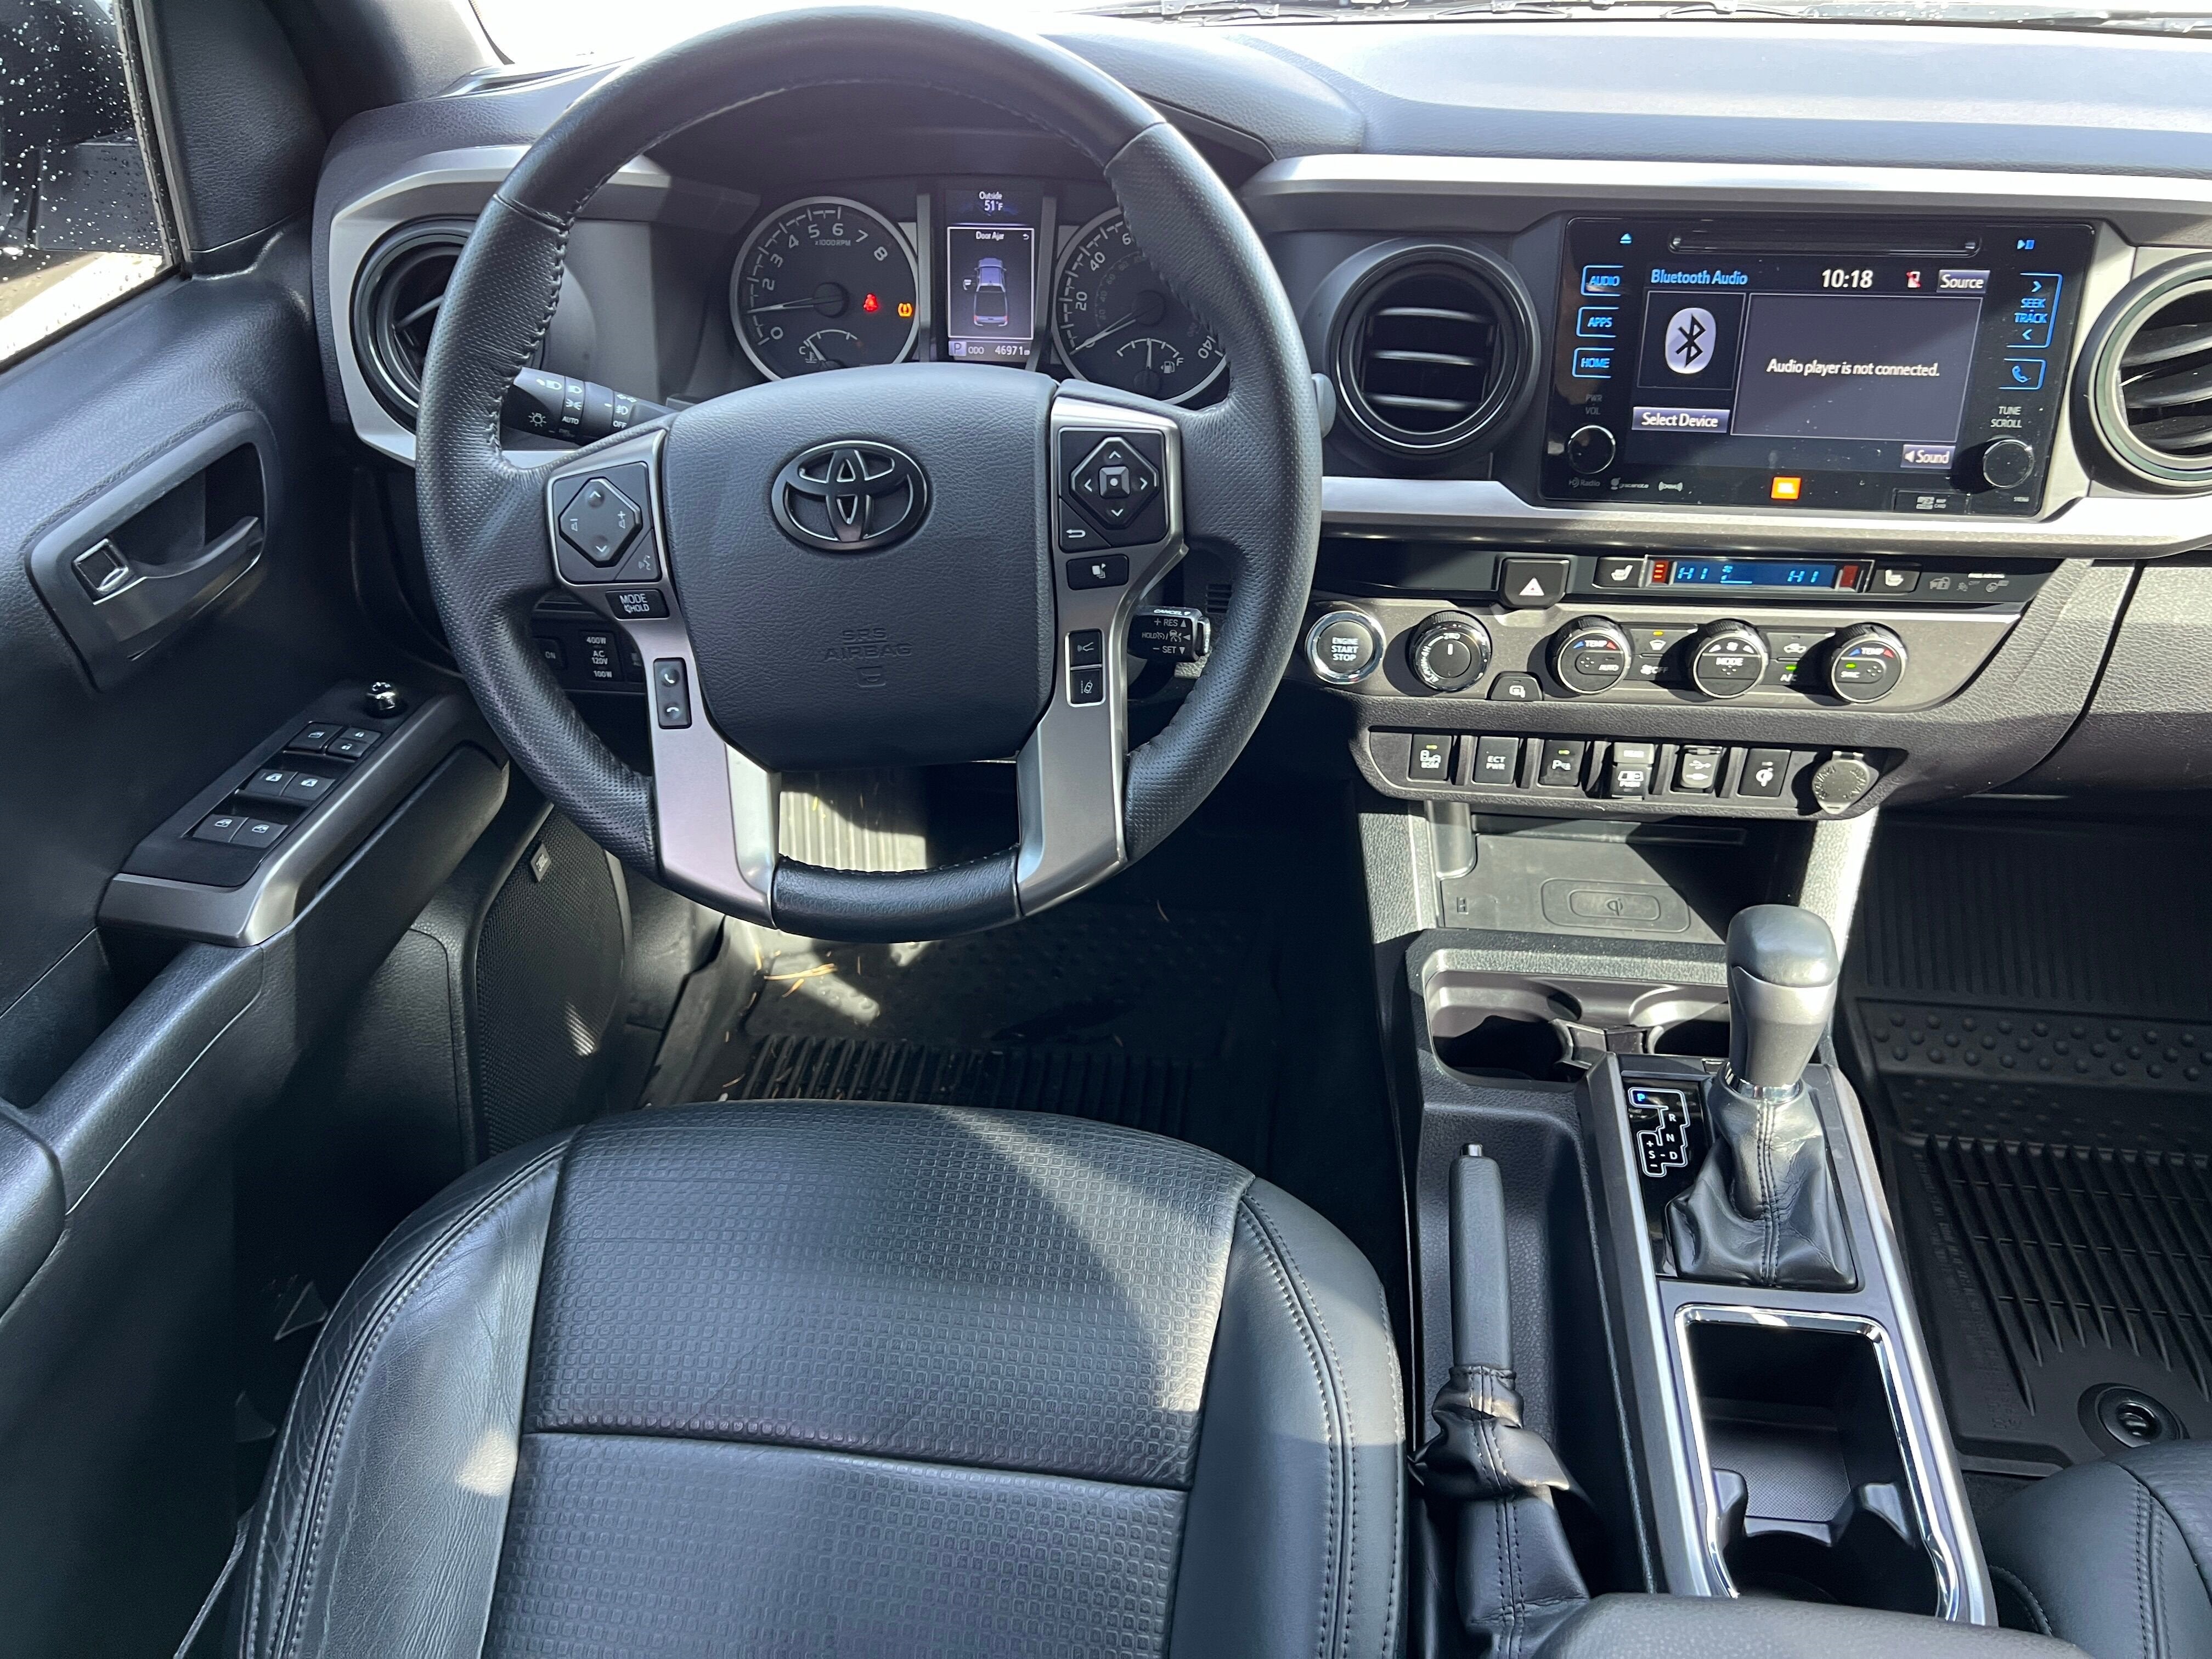 2019 Toyota Tacoma 4WD Limited